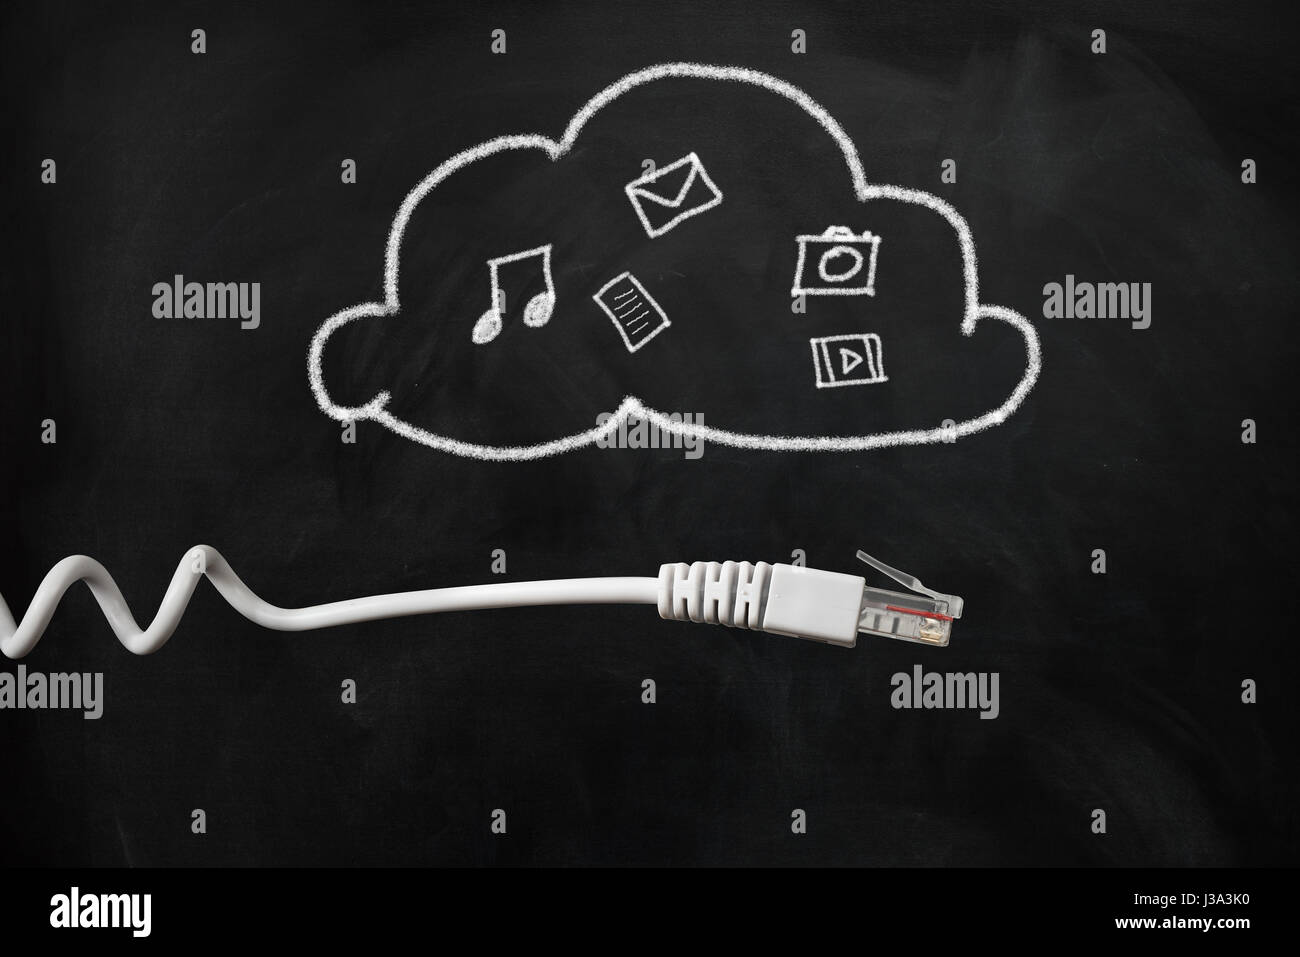 Cloud Computing Concept on Blackboard Stock Photo